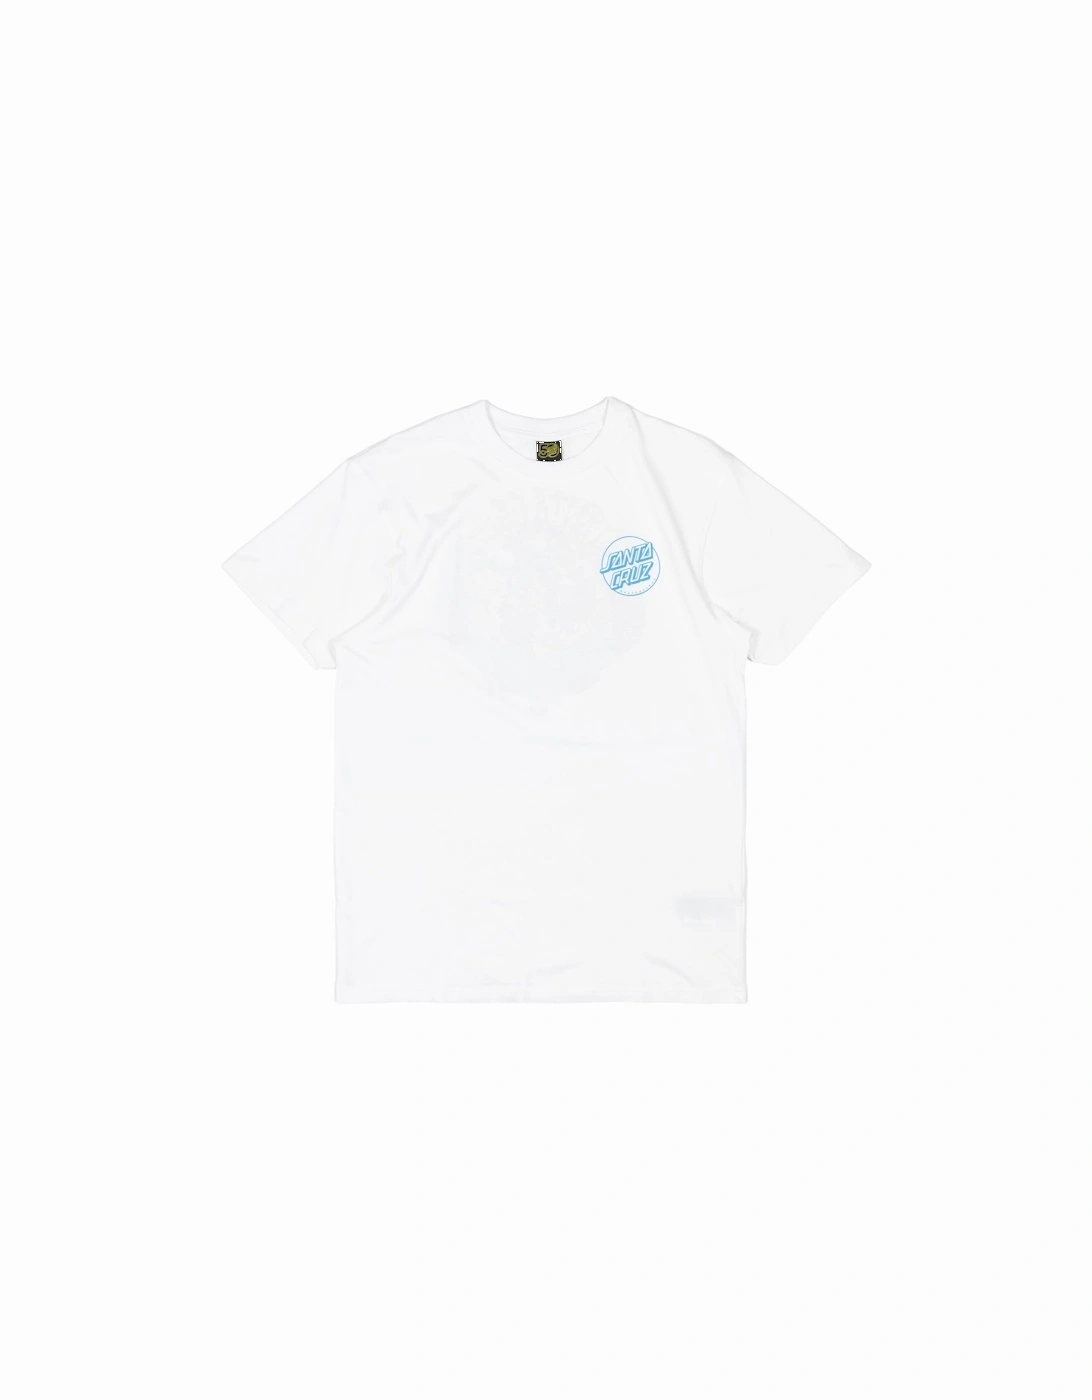 Dressen Mash Up Opus T-Shirt - White